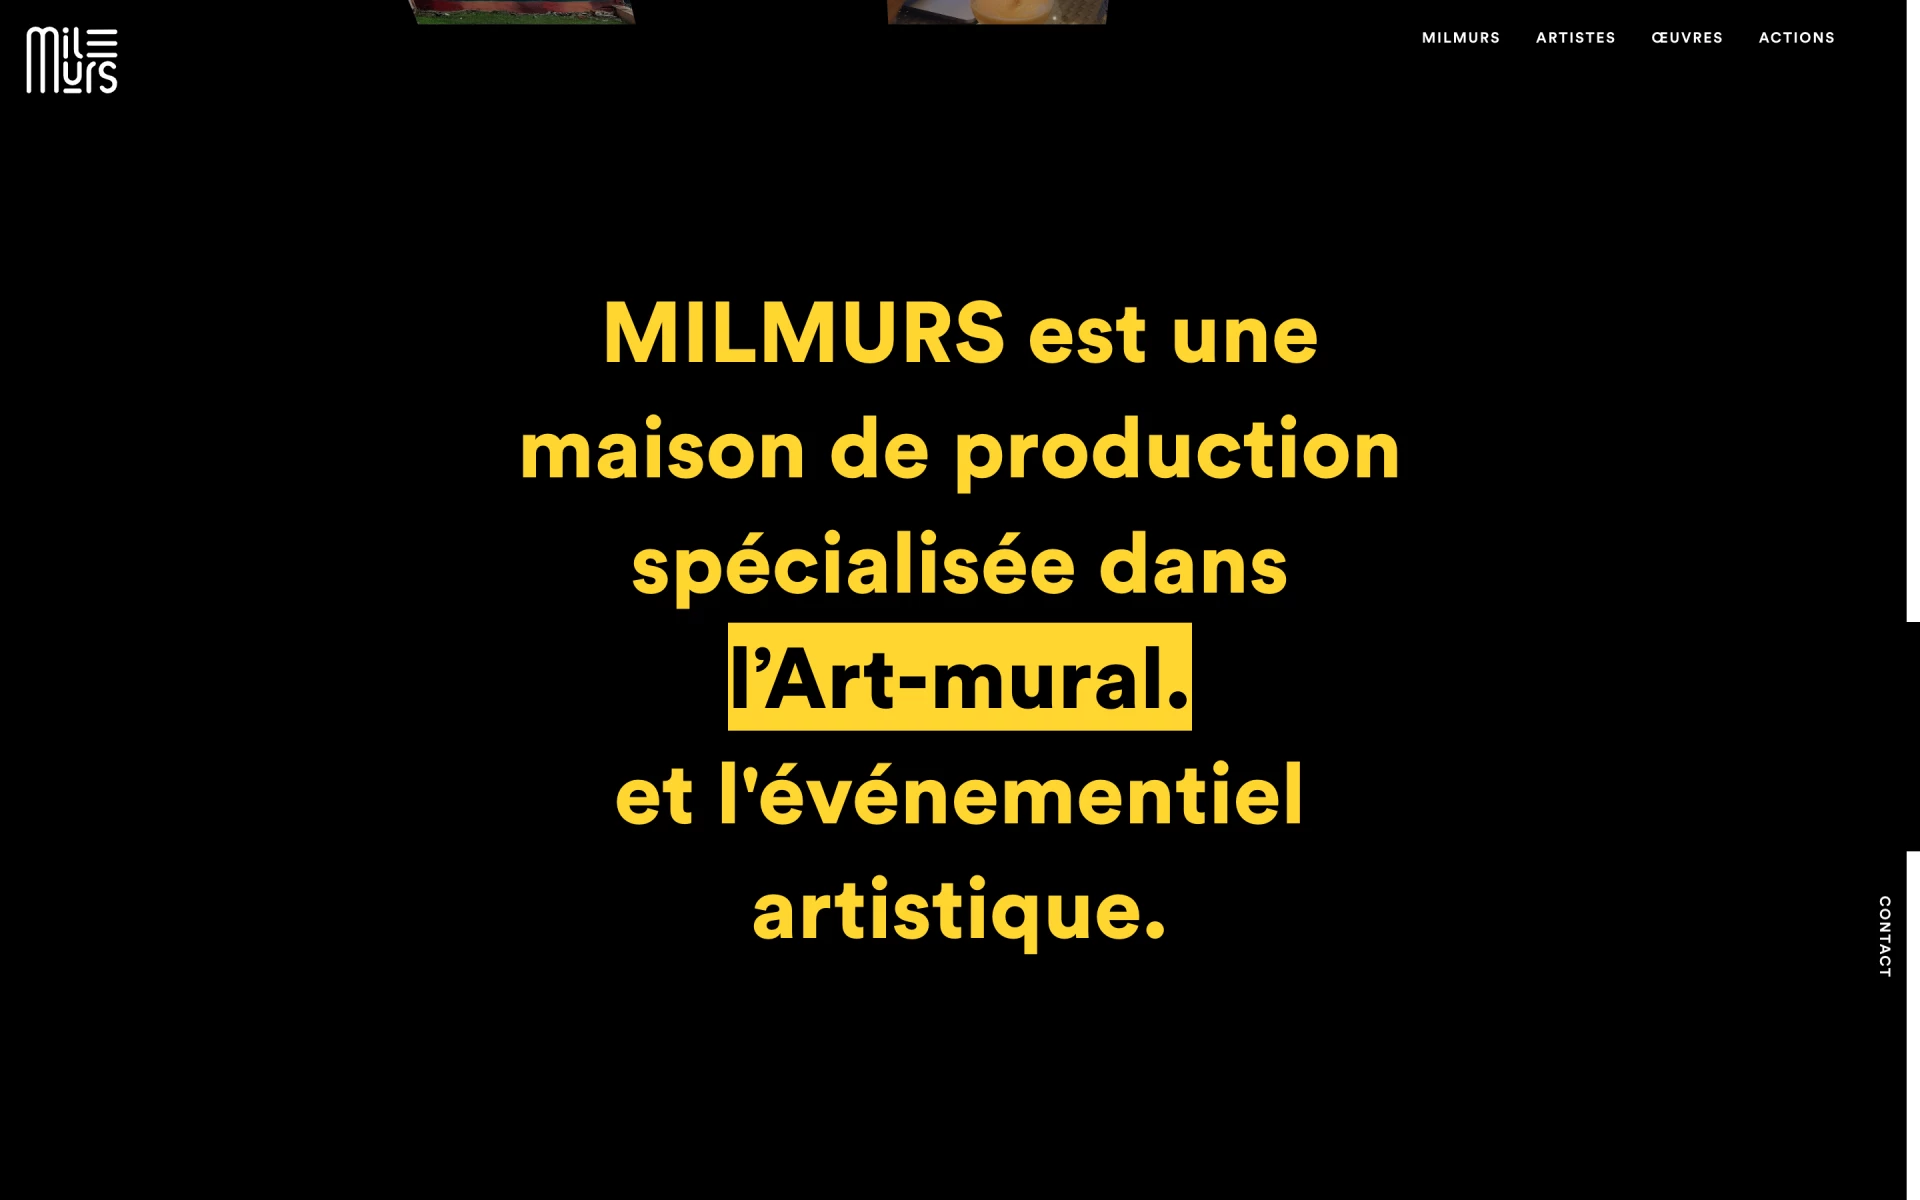  Milmurs production Art-mural